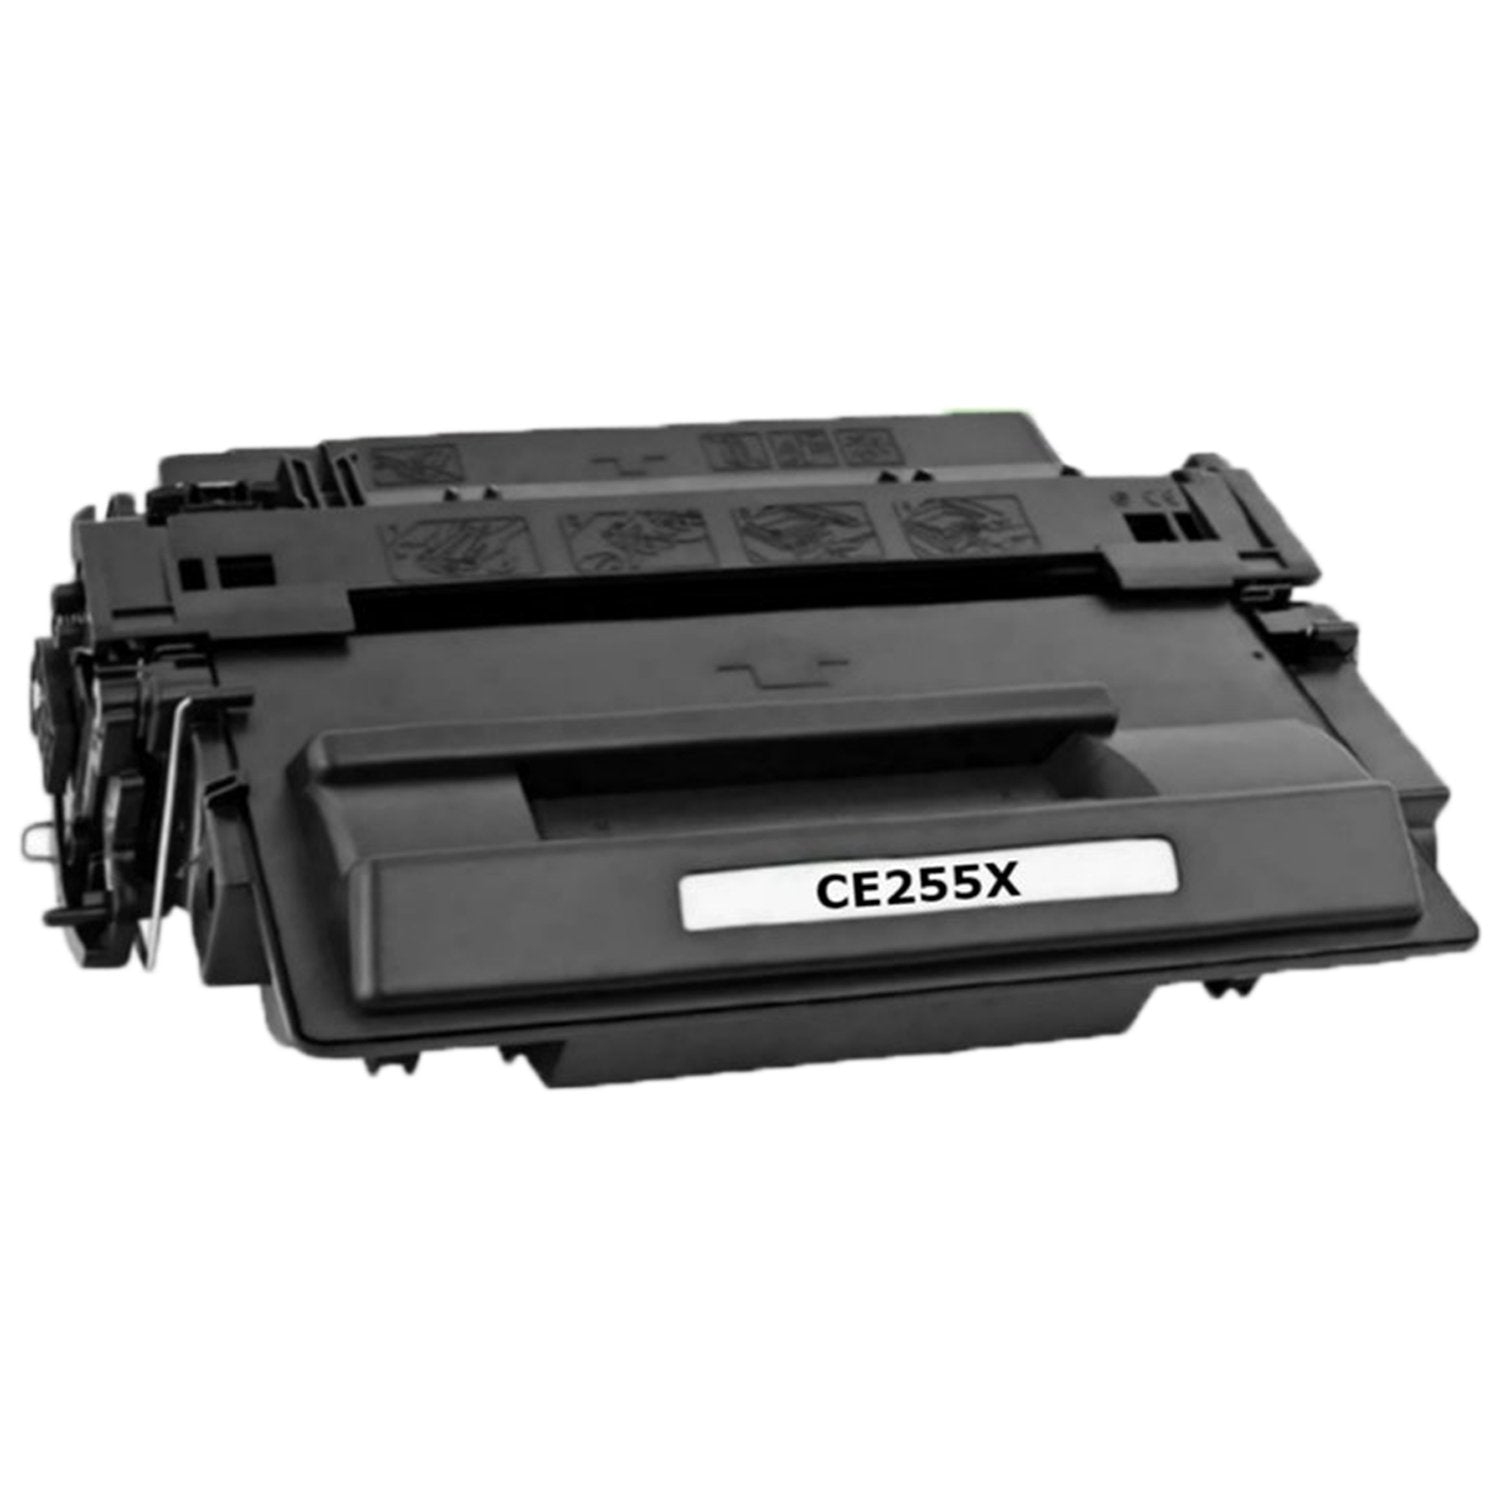 HP LaserJet P3010 Toner Cartridges and